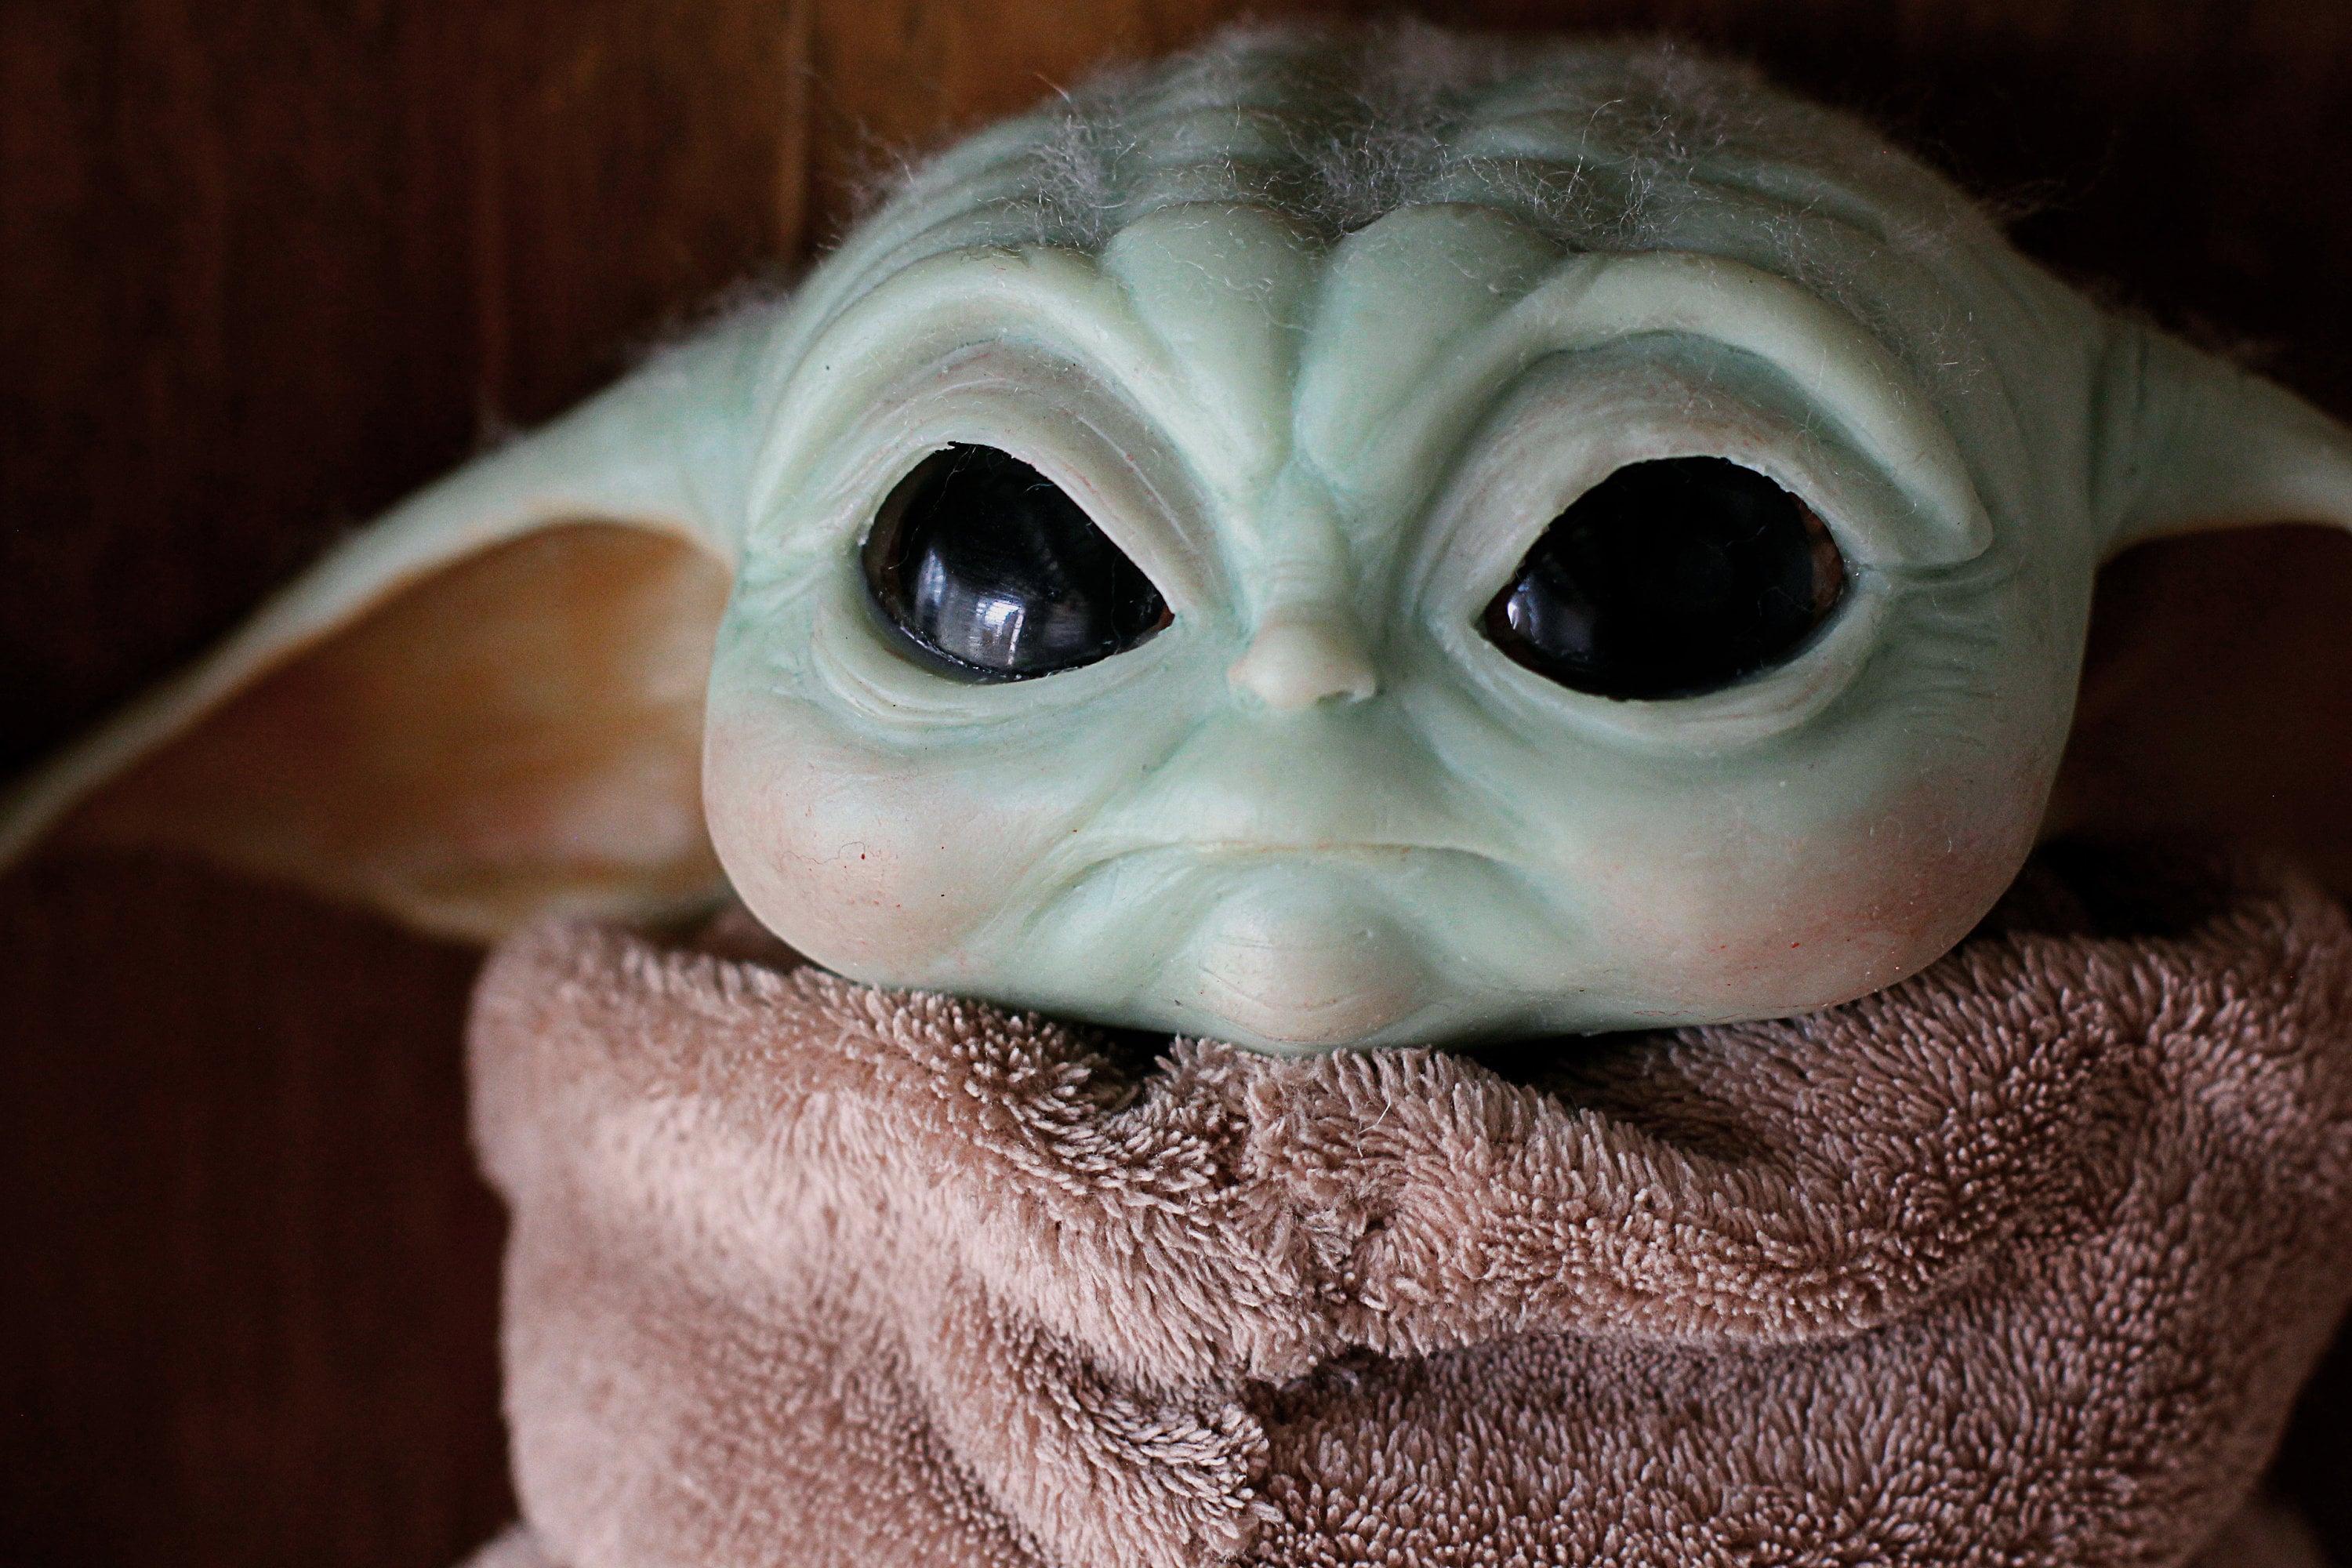 Baby Yoda Realistic Inspired Art Doll | Etsy